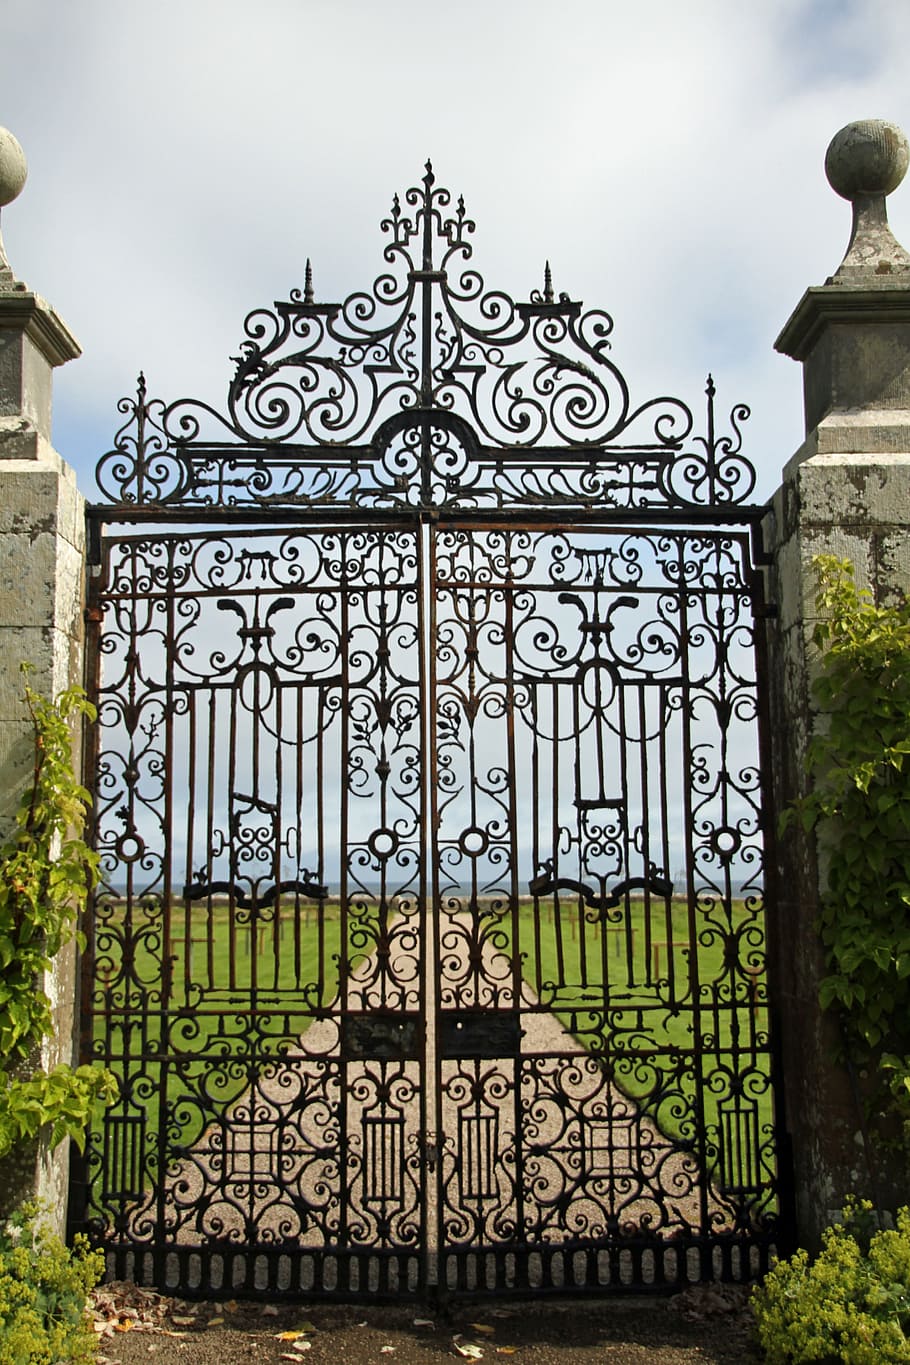 closed, black, metal scrolled gate, gate, door, entrance, old, metal, ancient, antique